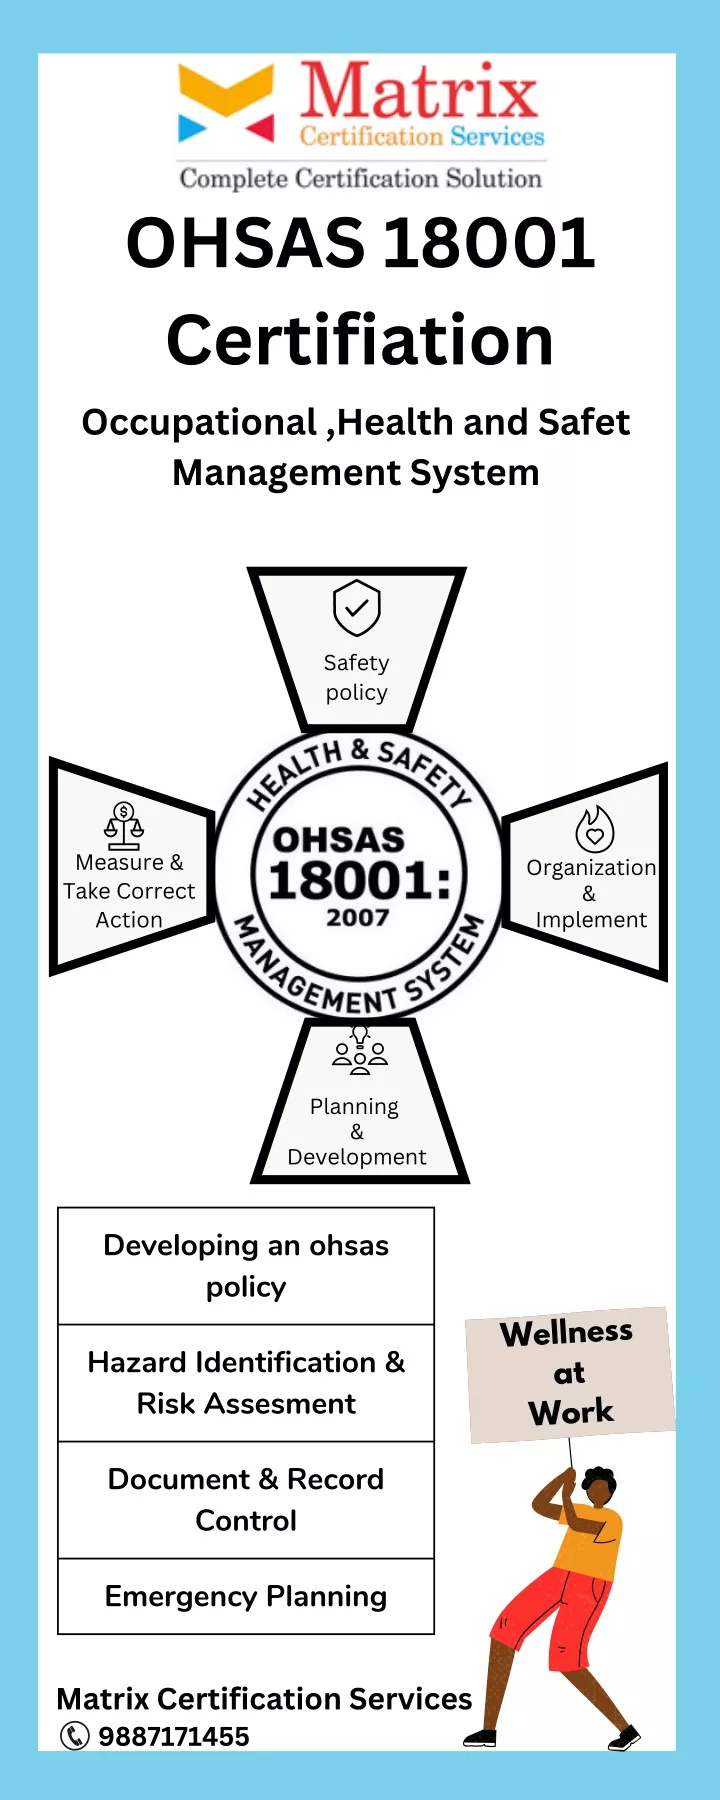 ohsas 18001 certifiation occupational health